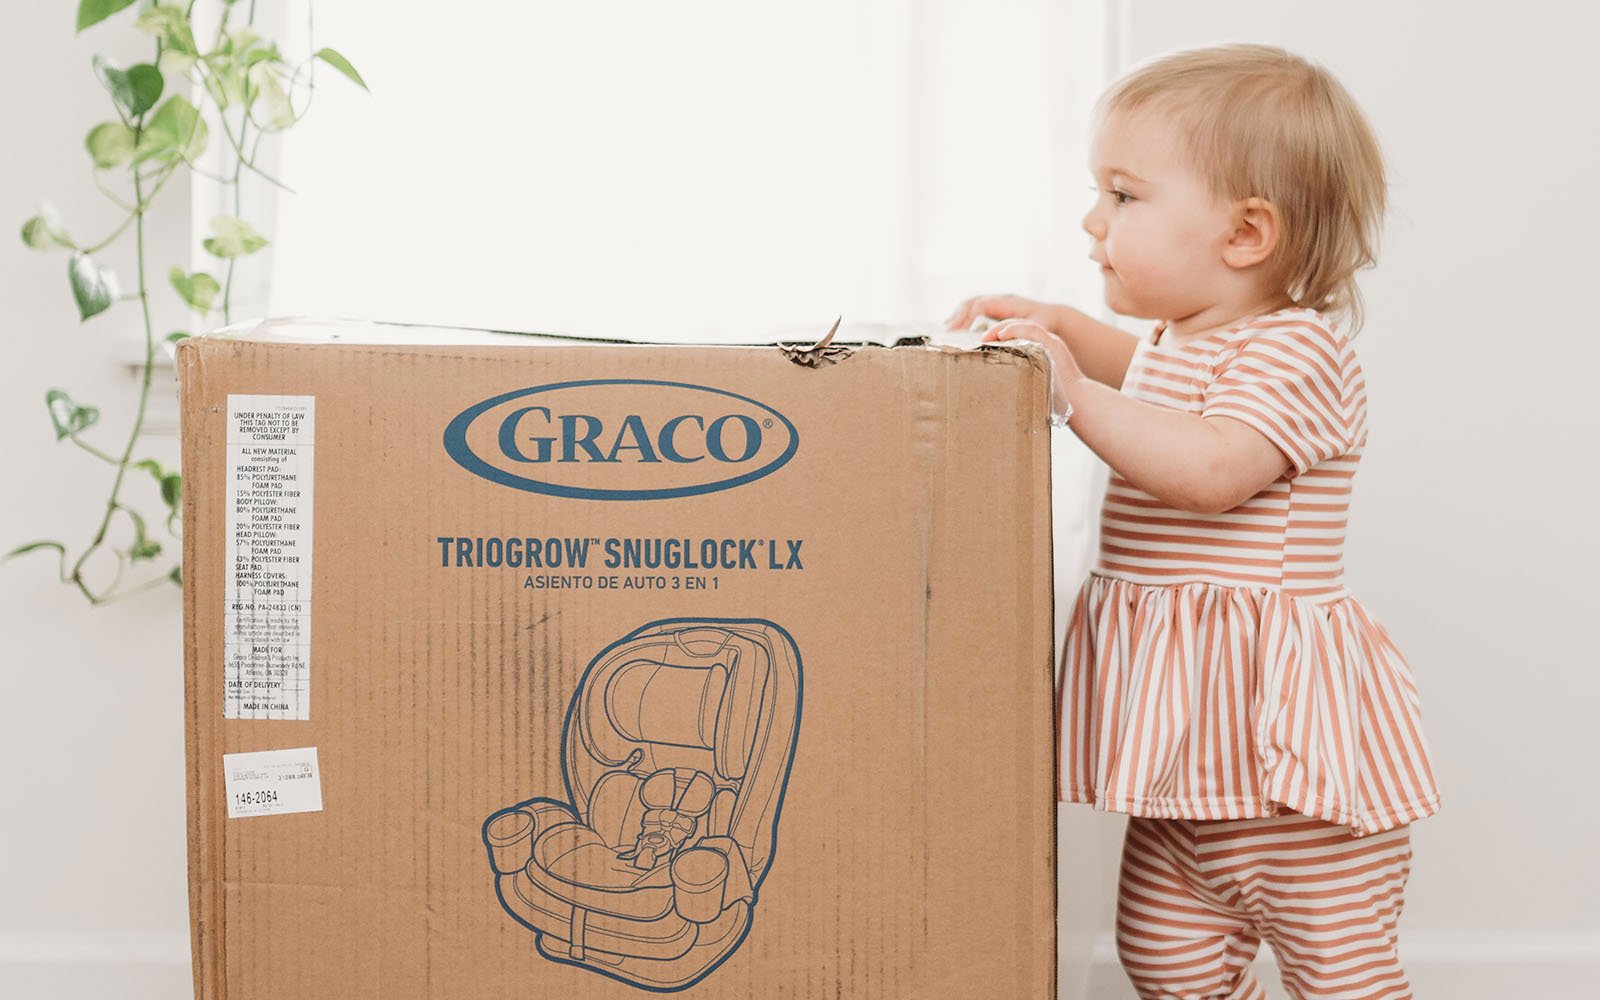 Baby standing next to cardboard box